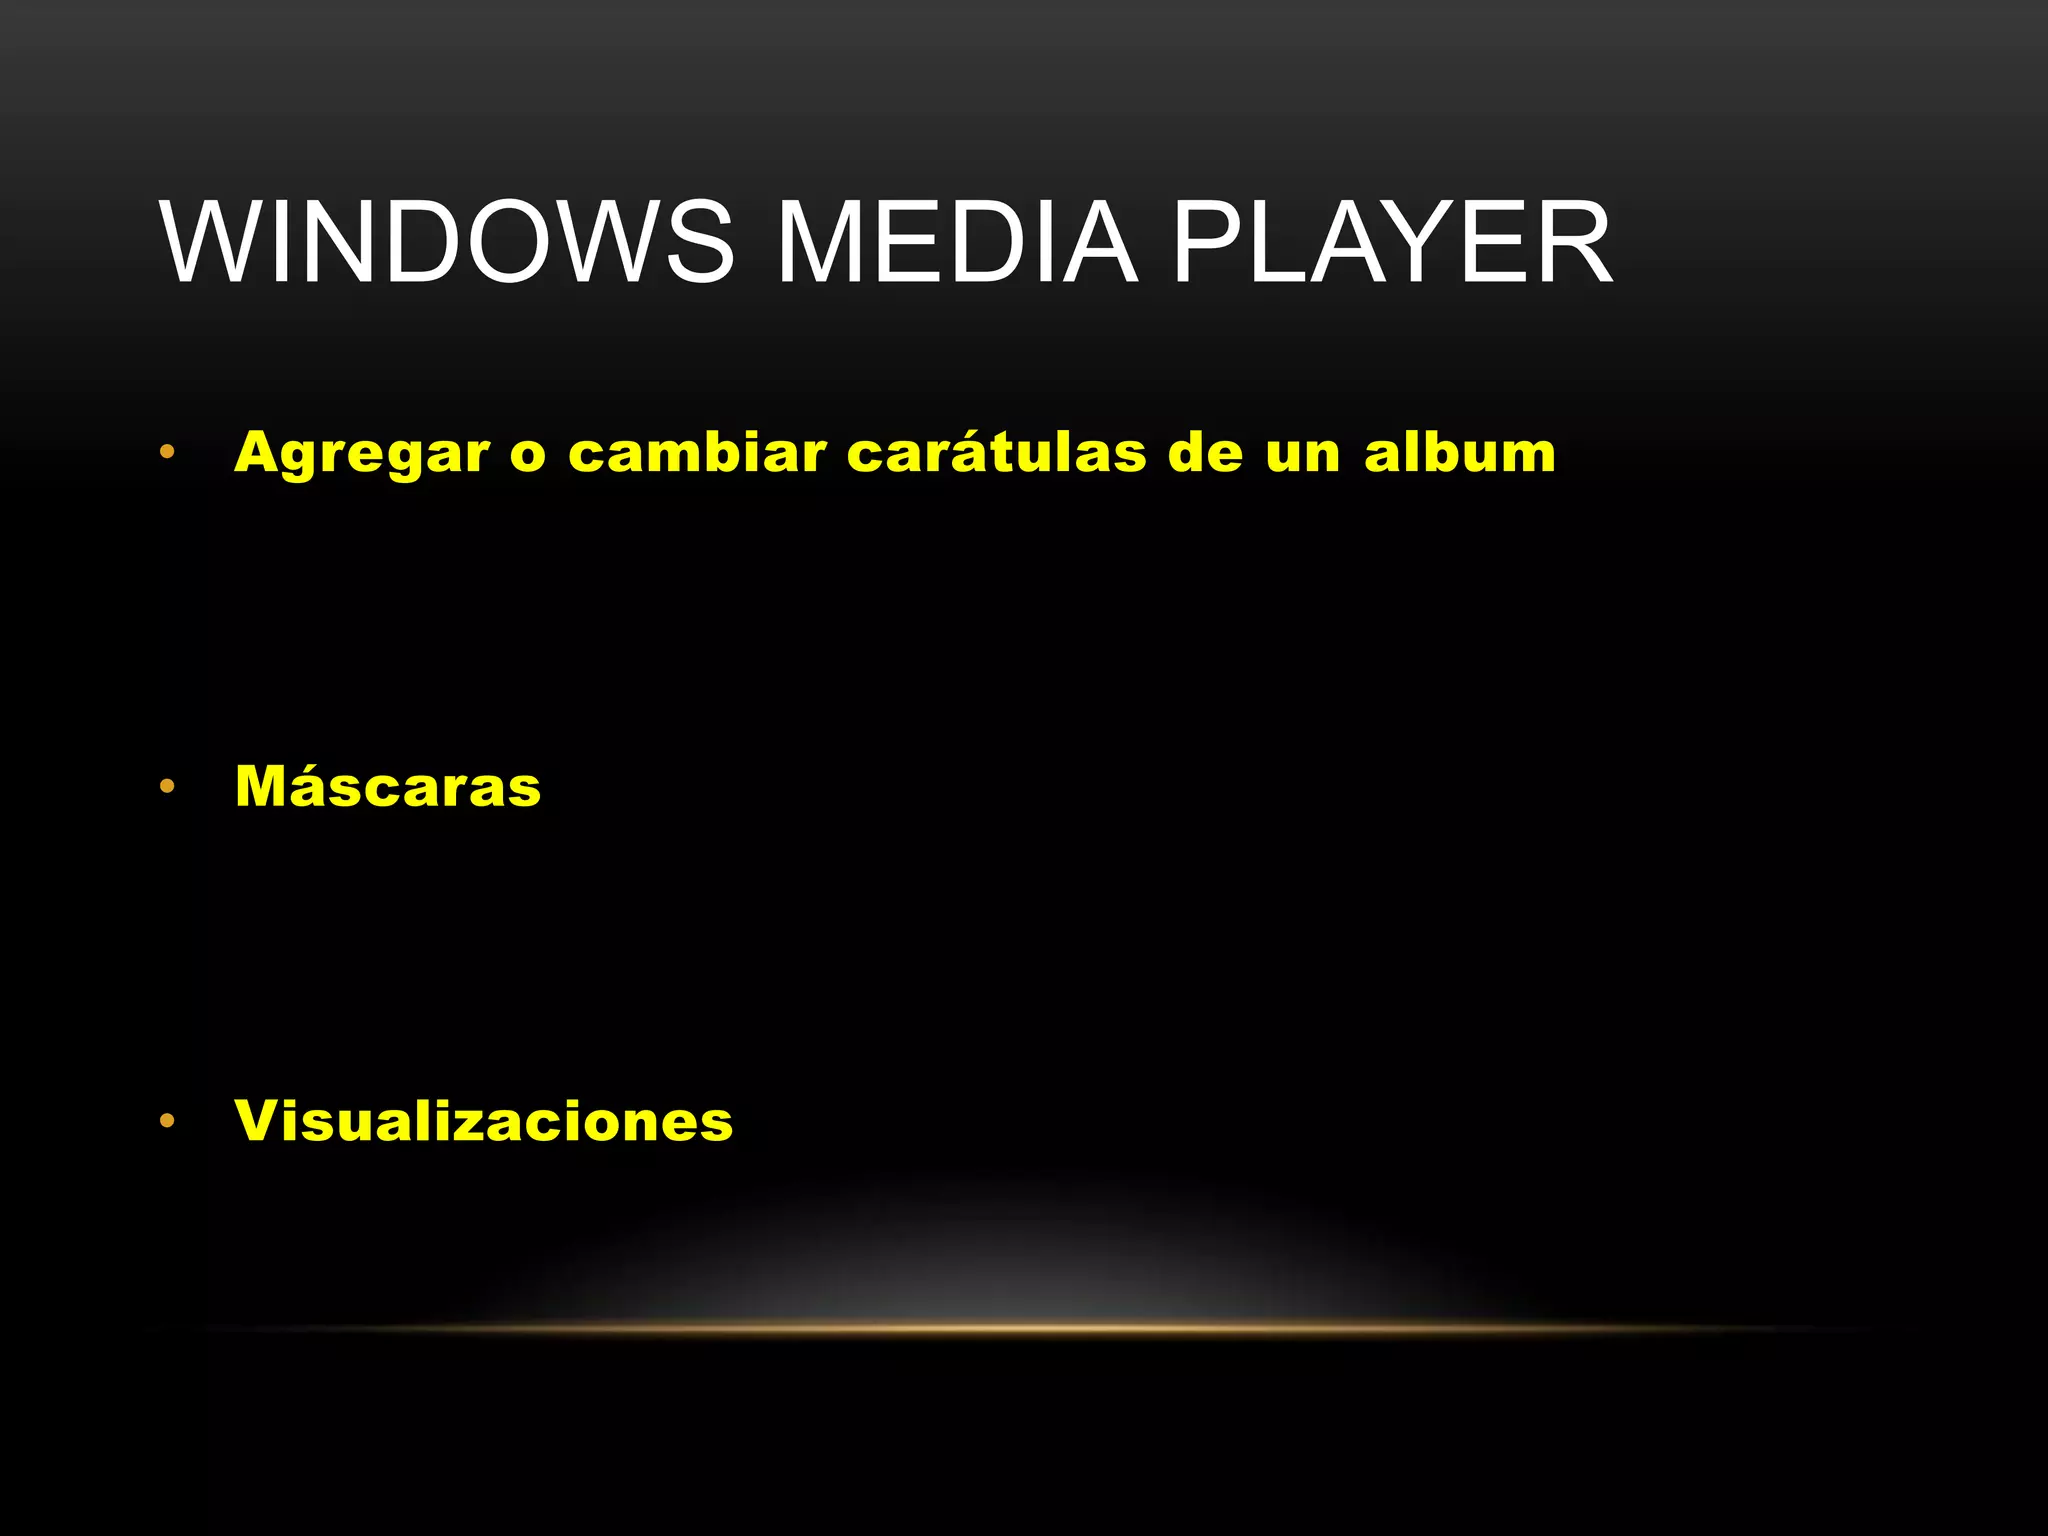 Windows media player